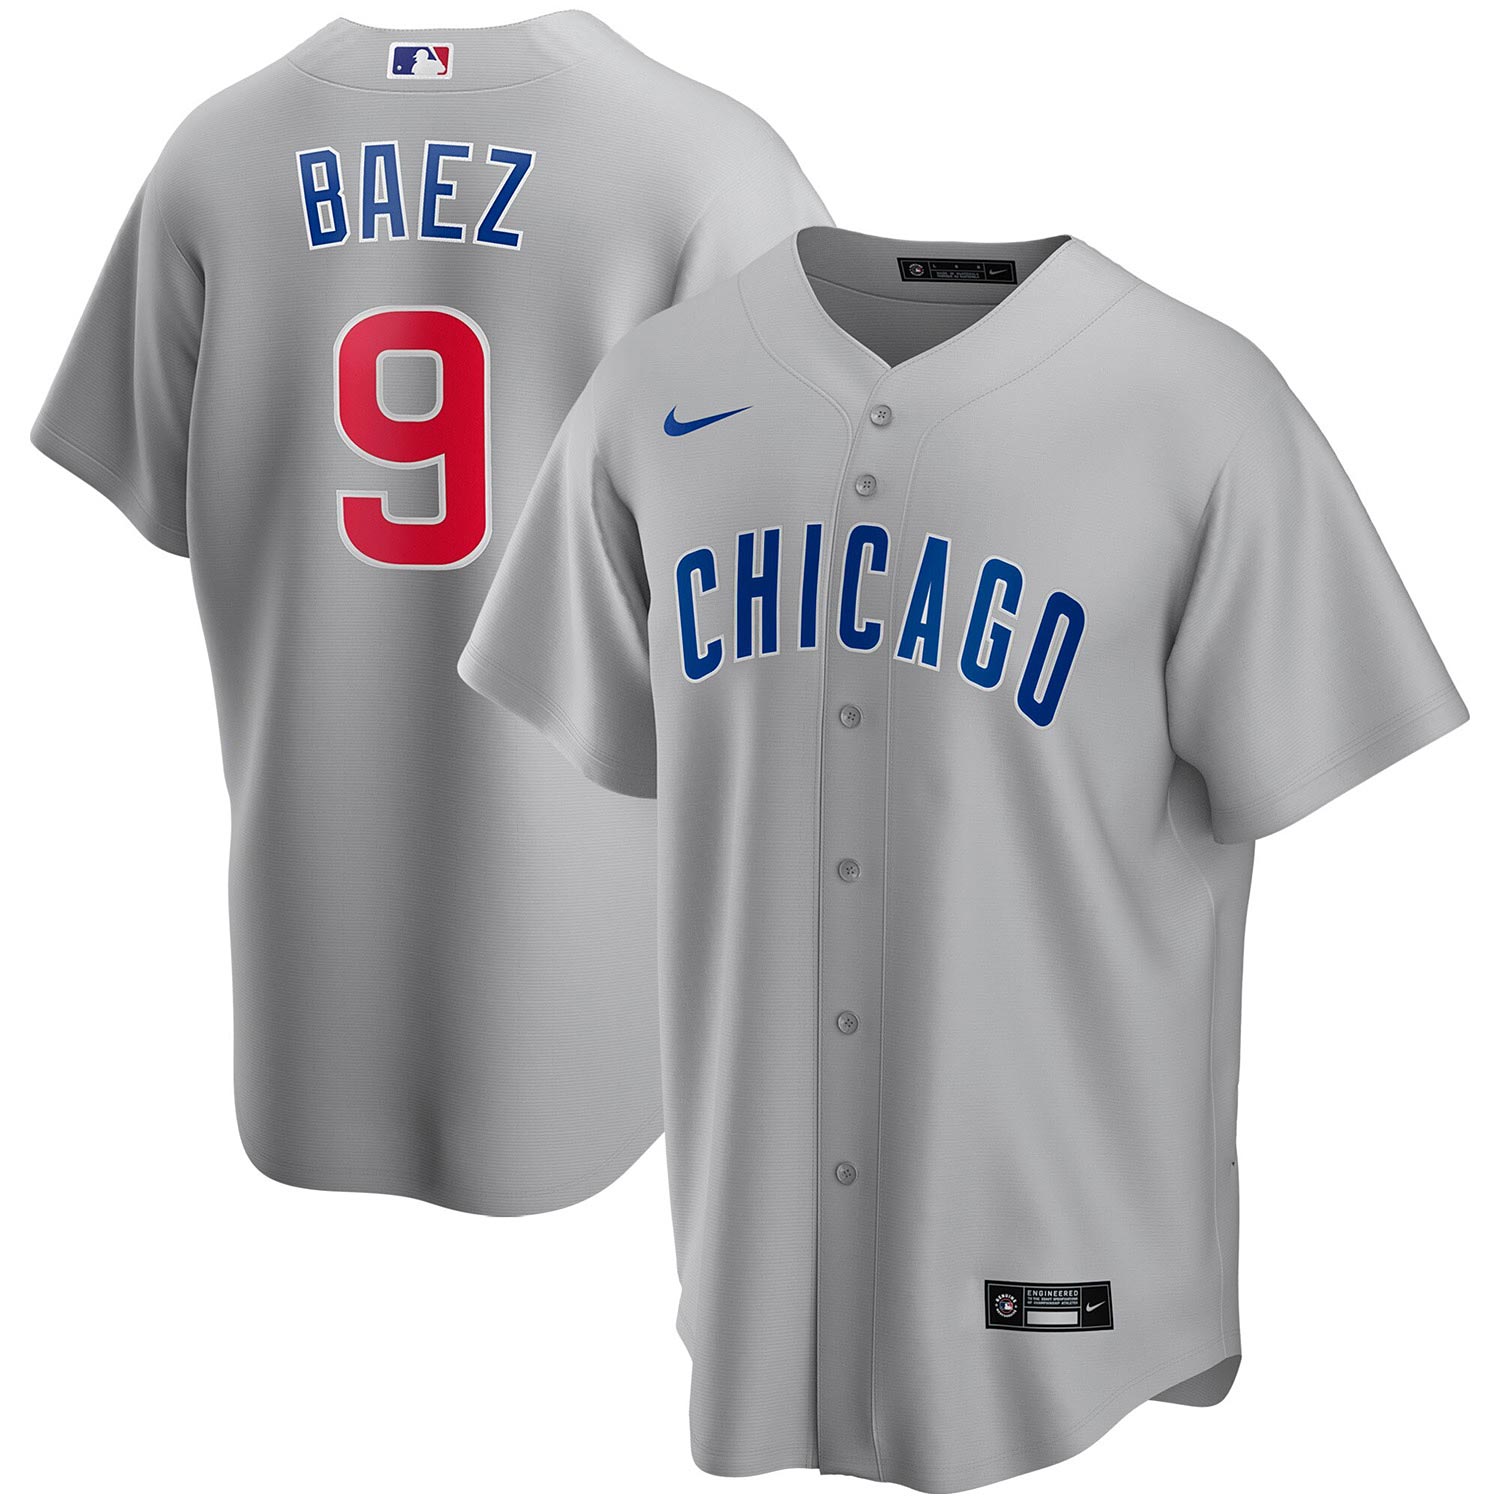 MLB Chicago Cubs (Javier Báez) Men's Replica Baseball Jersey.